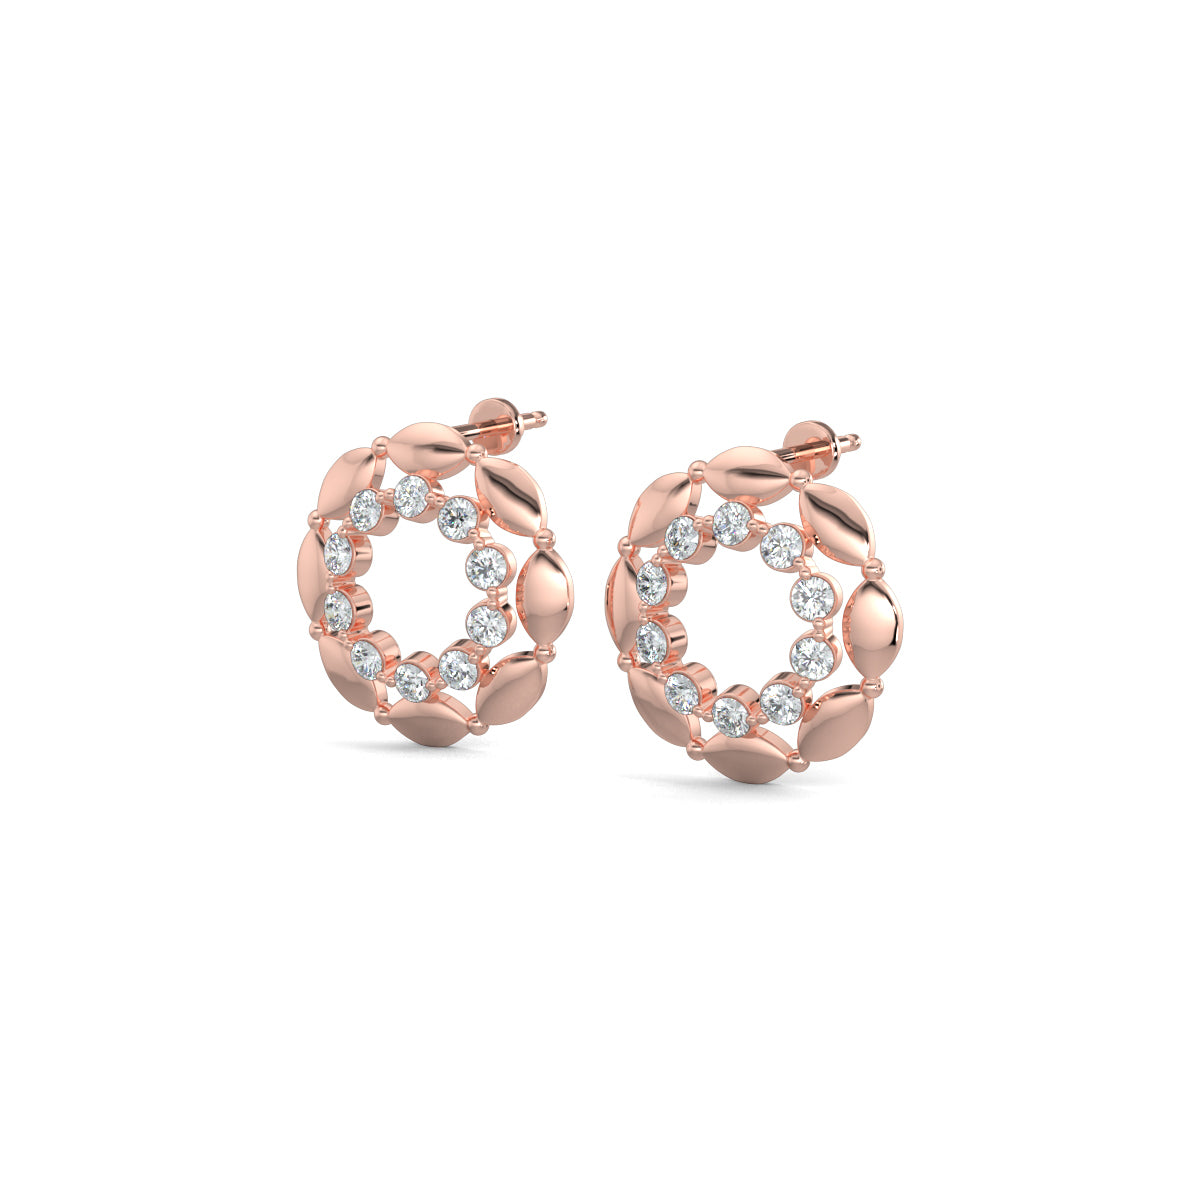 Rose Gold, Diamond Earrings, Vivara round diamond earrings, natural diamond studs, lab-grown diamond studs, elegant diamond earrings, round-shaped earrings, sophisticated jewelry